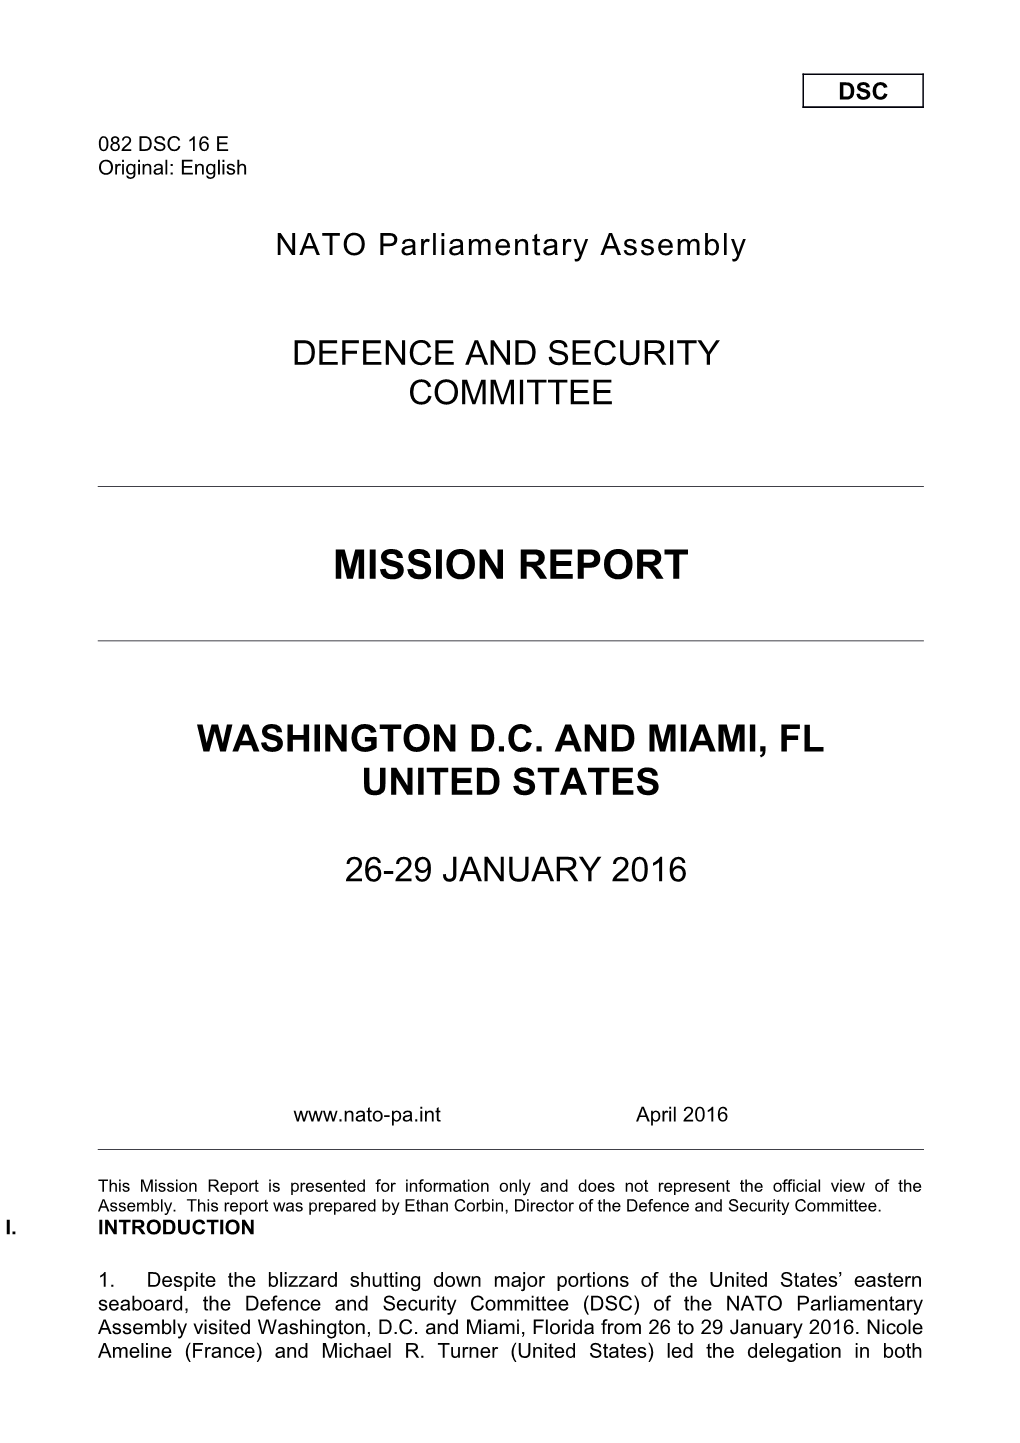 082 DSC 16 E - Mission Report DSC Visit to USA